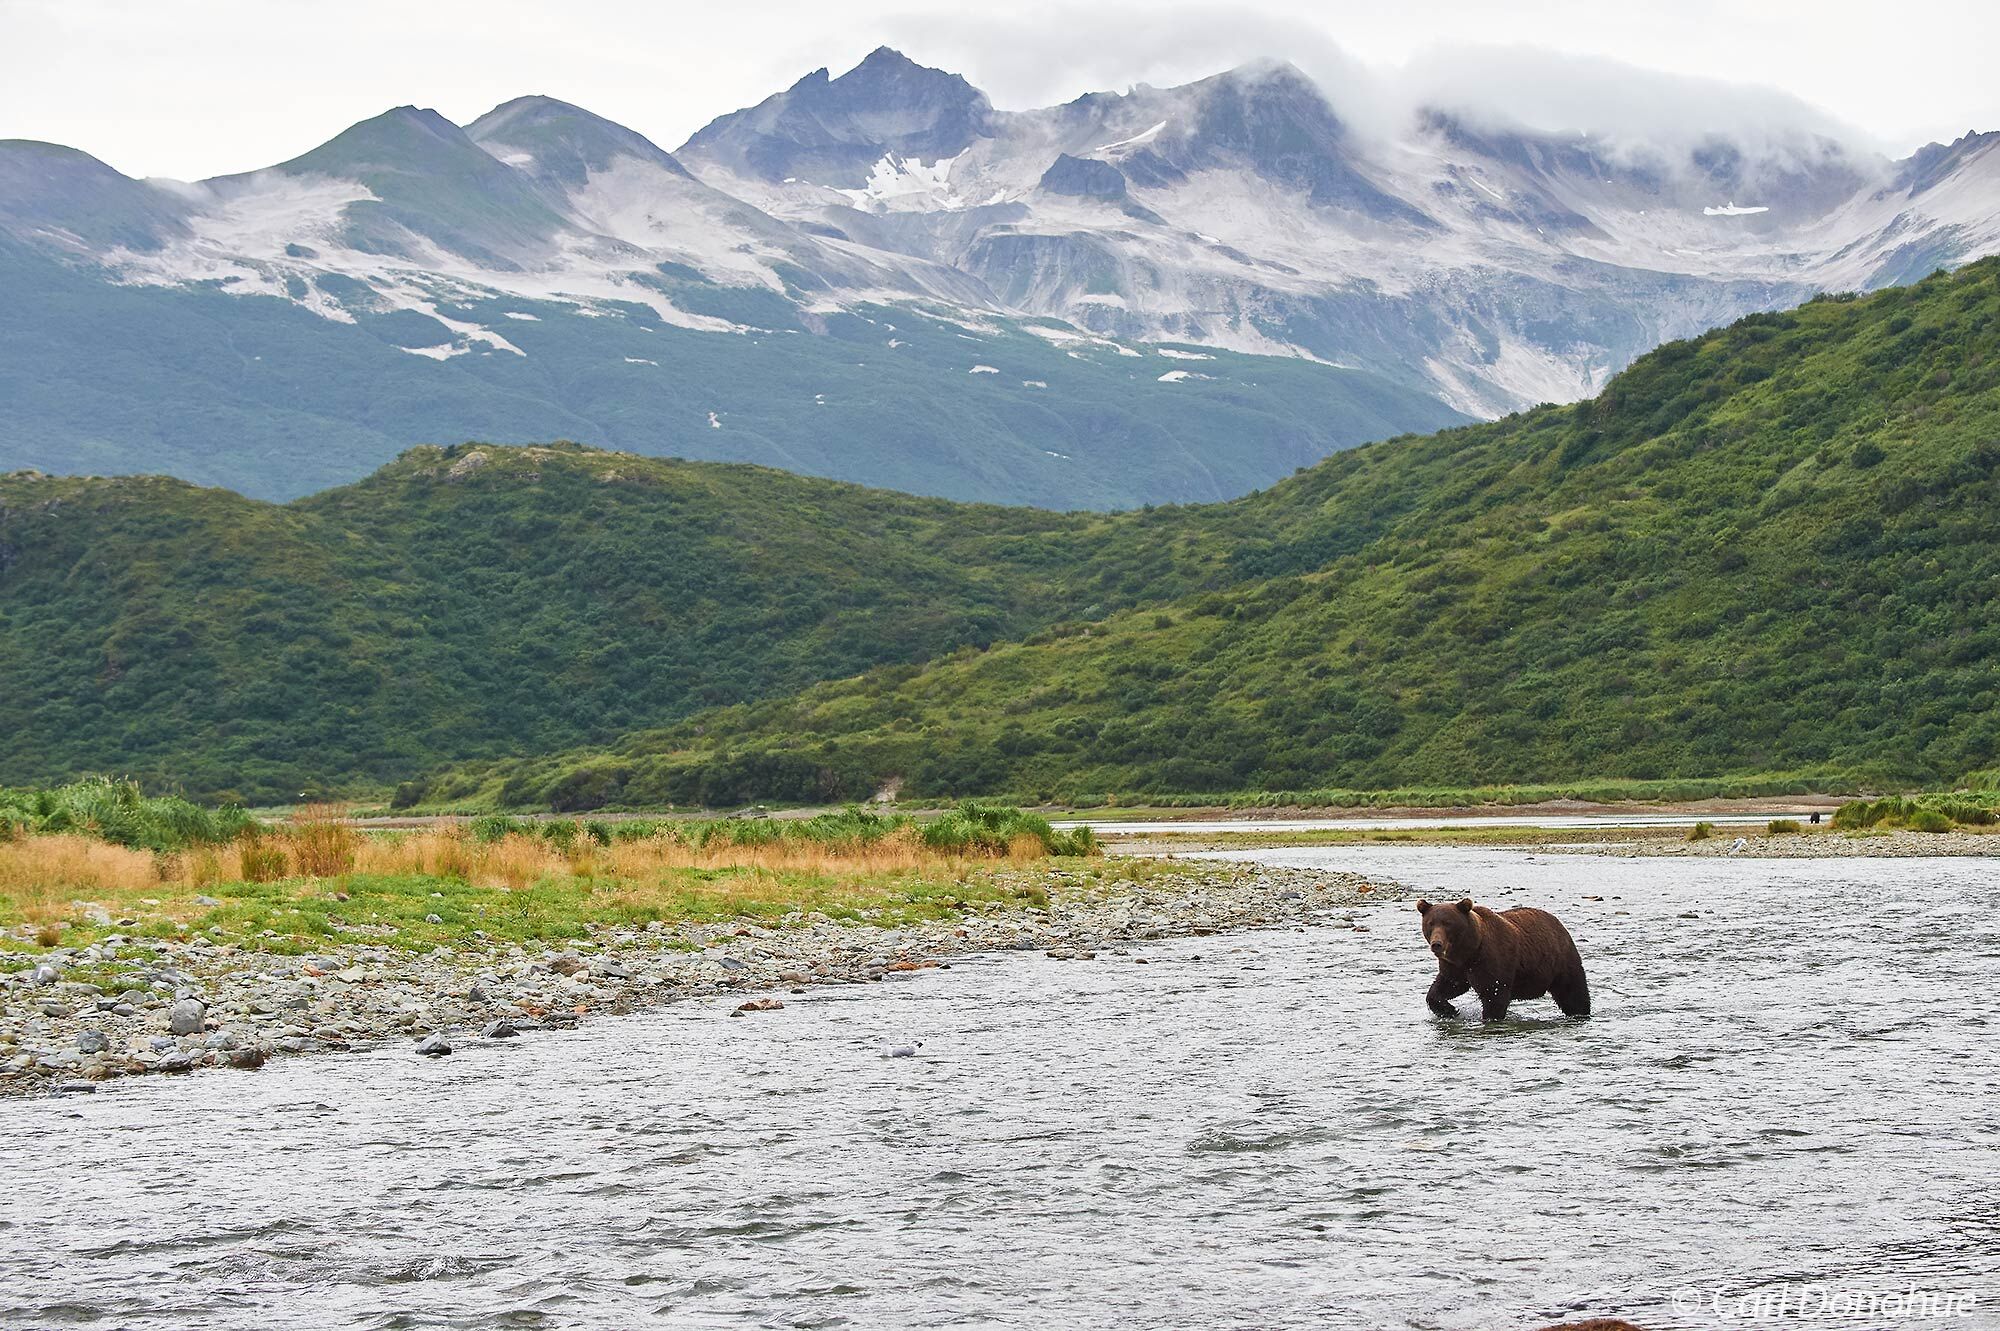 Brown bear searching for salmon in a small stream on the Katmai Coast, Katmai National Park and Preserve, Alaska.